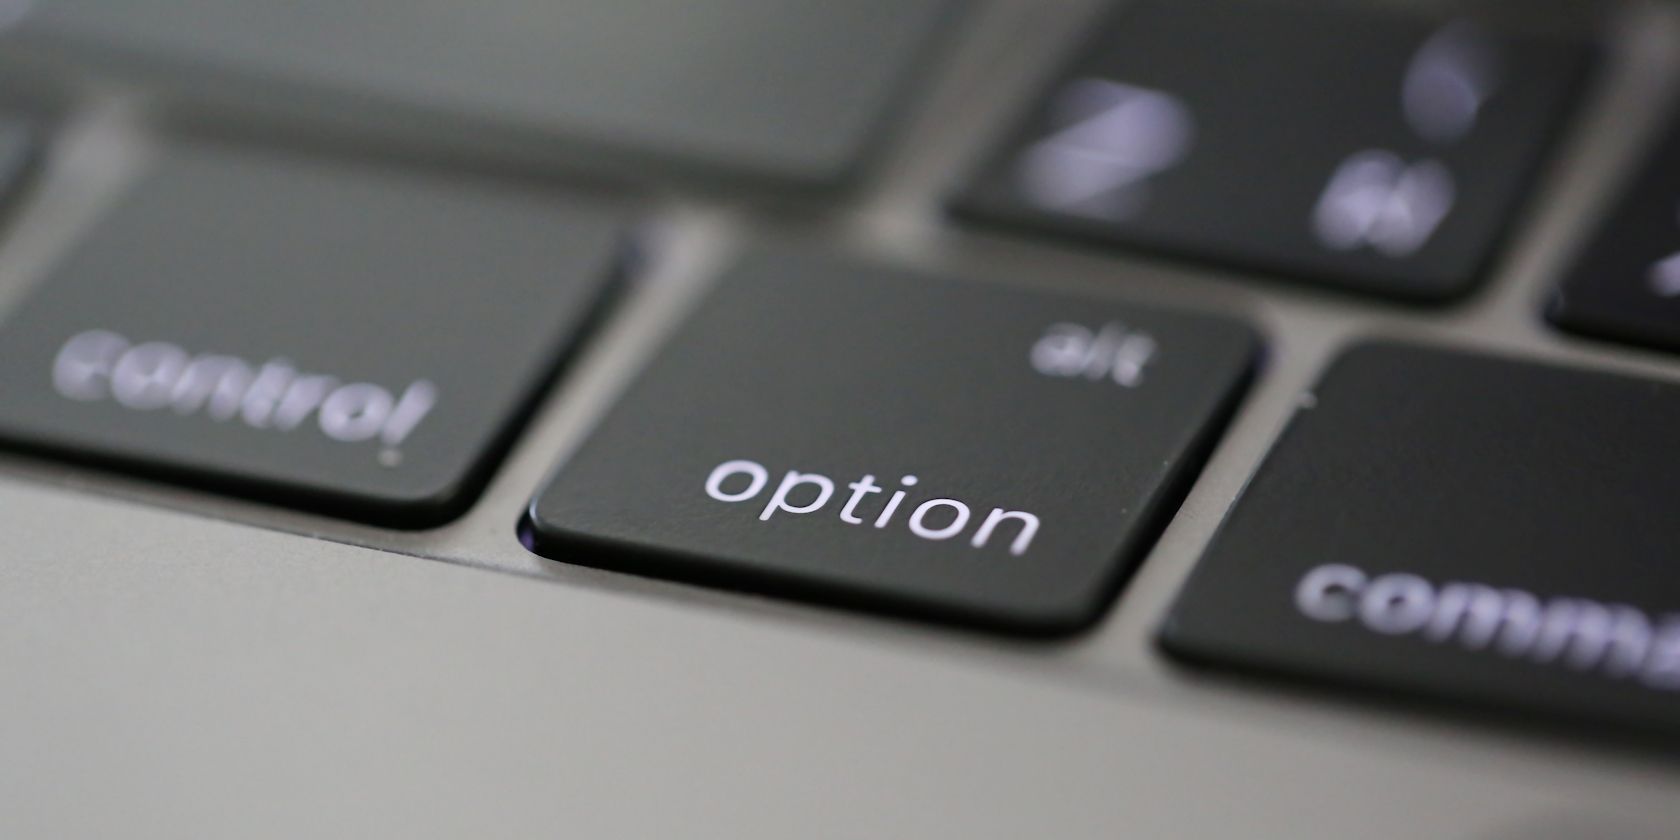 Option or Alt key on a MacBook keyboard